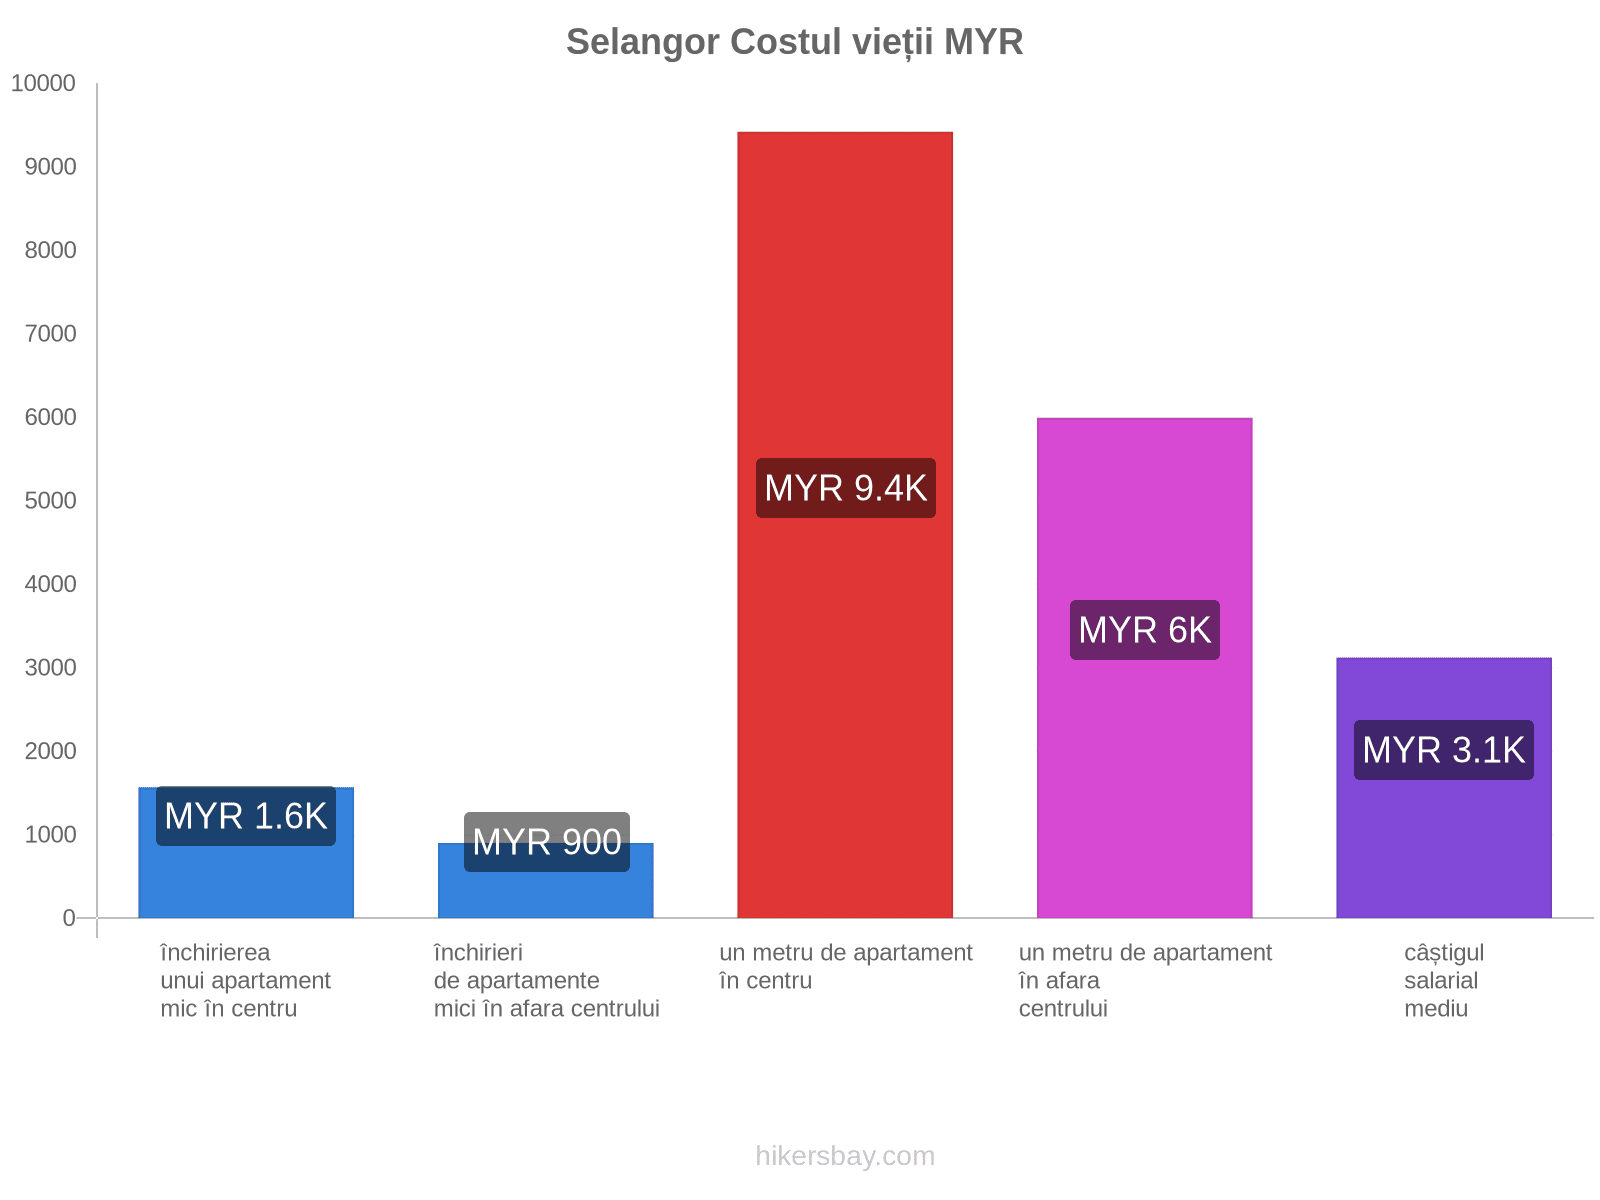 Selangor costul vieții hikersbay.com